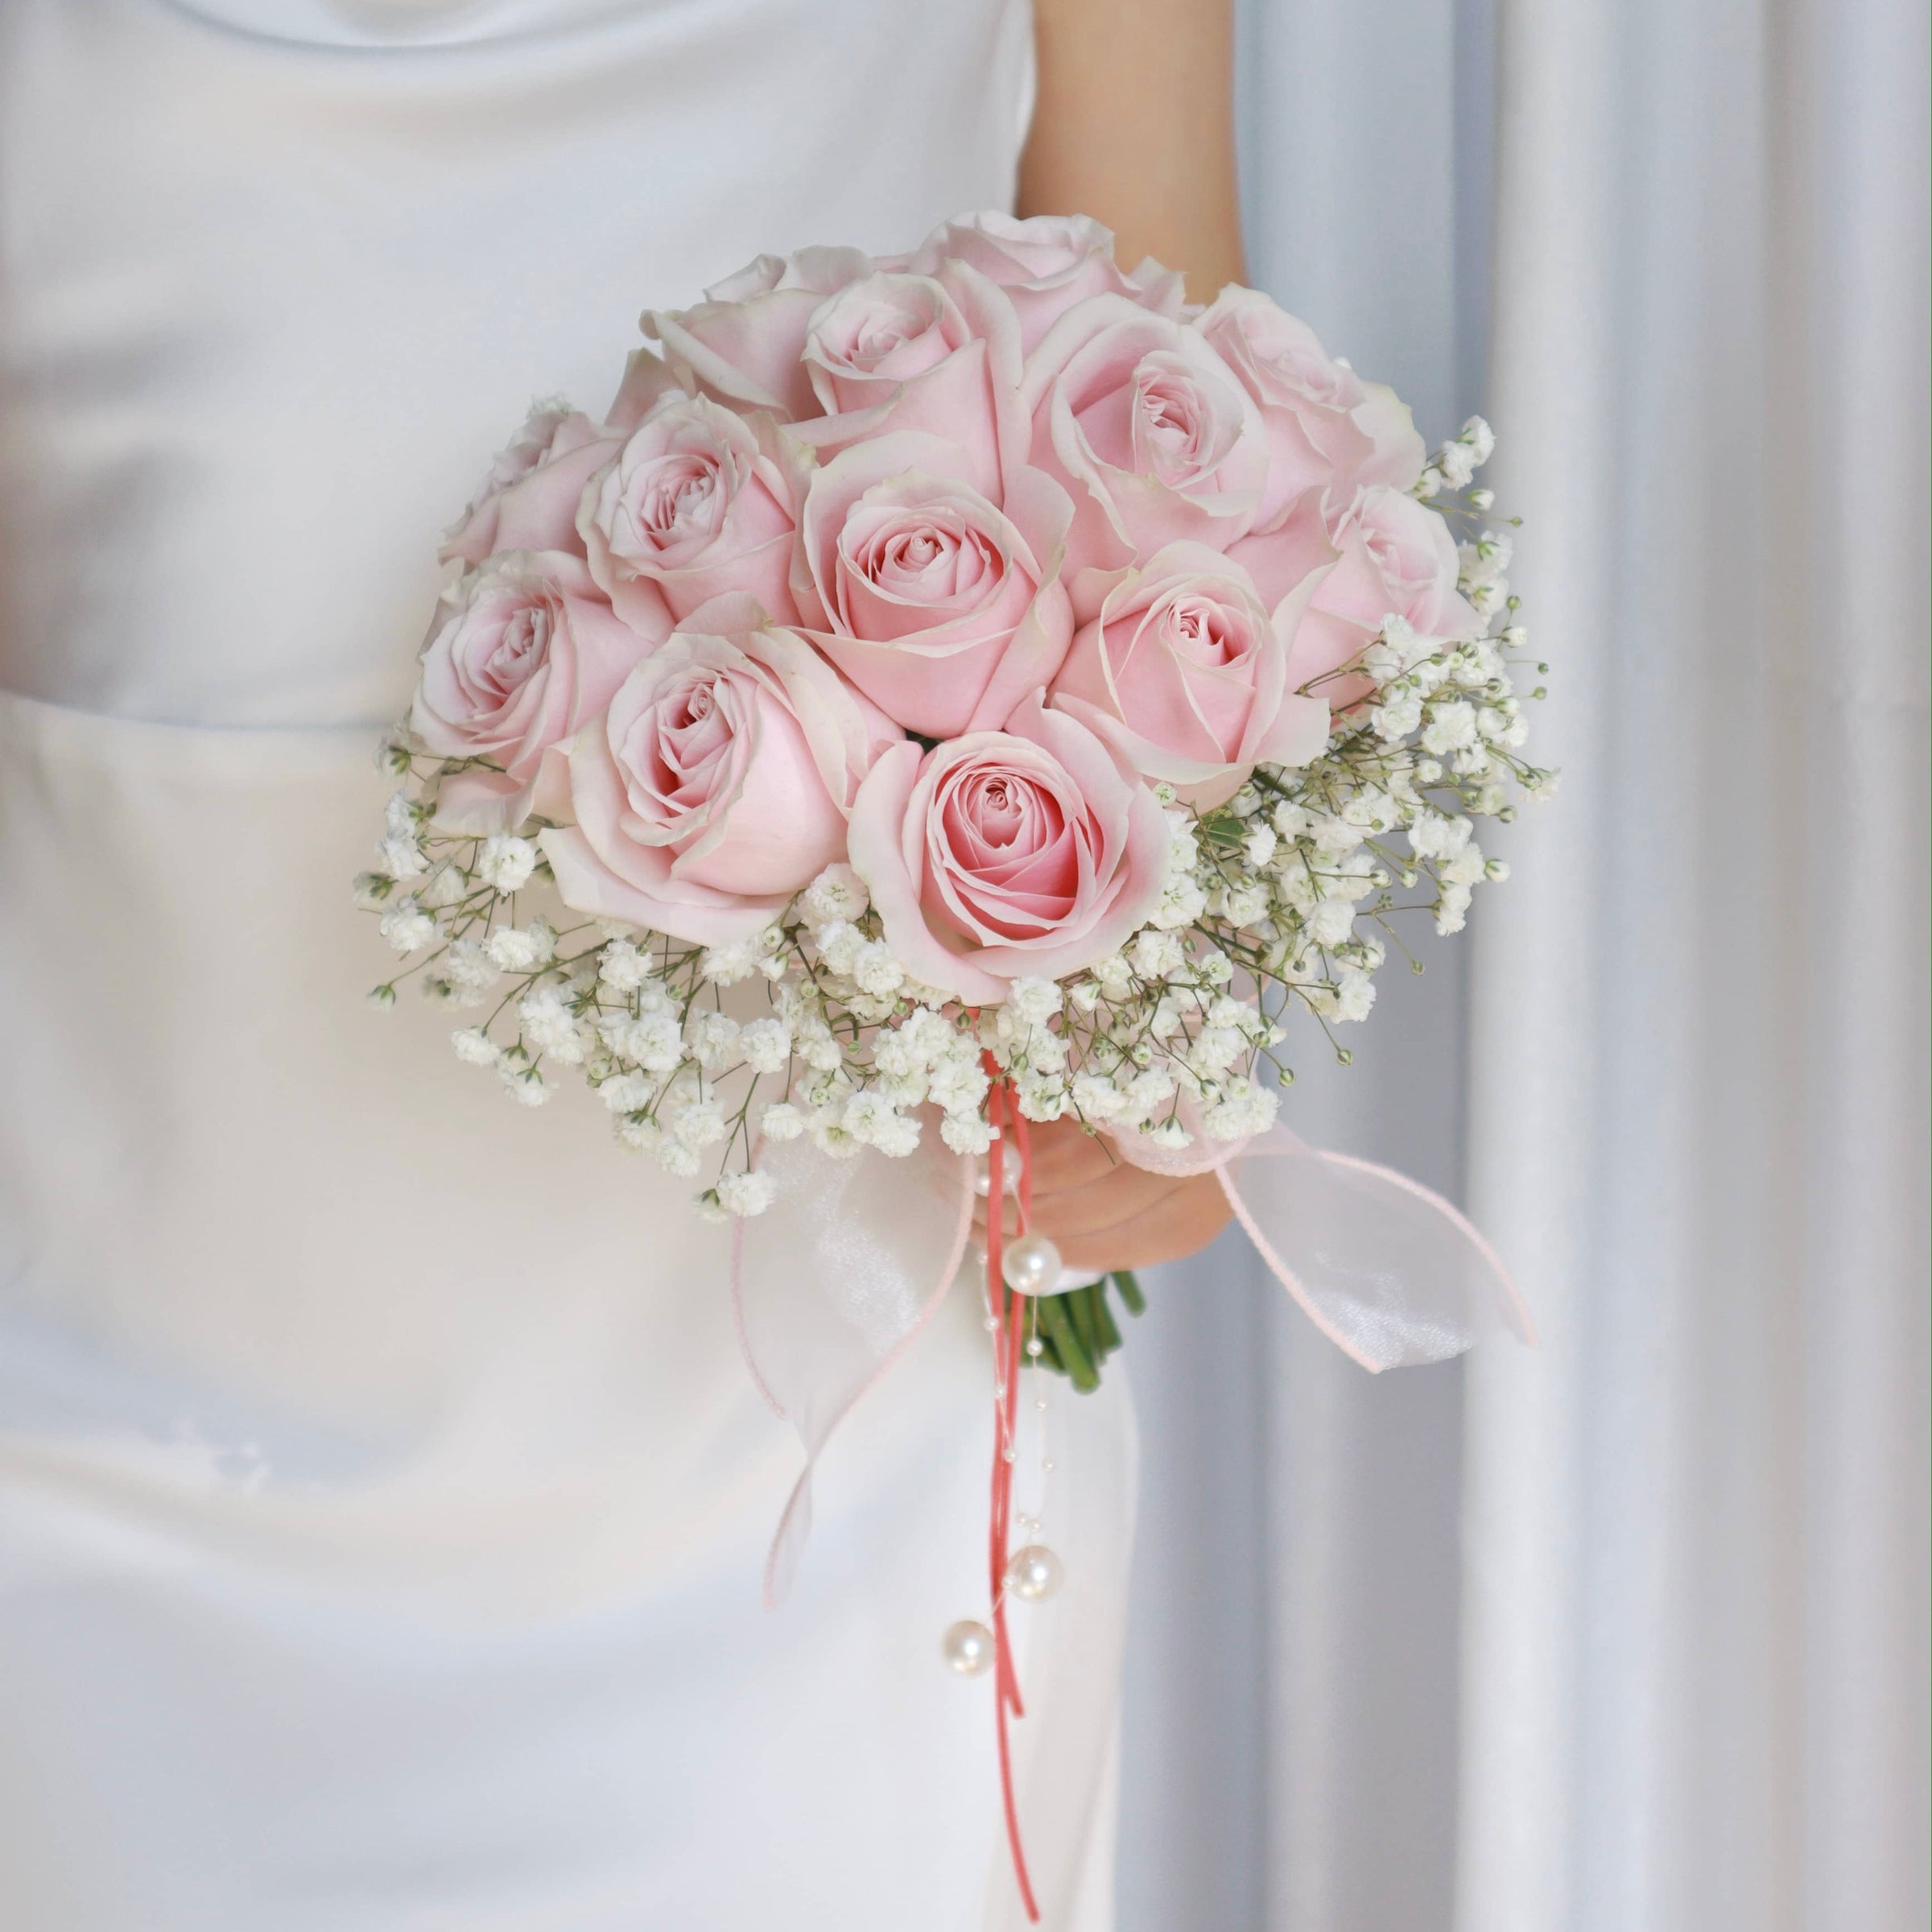 Baby's Breath Flower New Love | DIY Wedding Flowers | FiftyFlowers